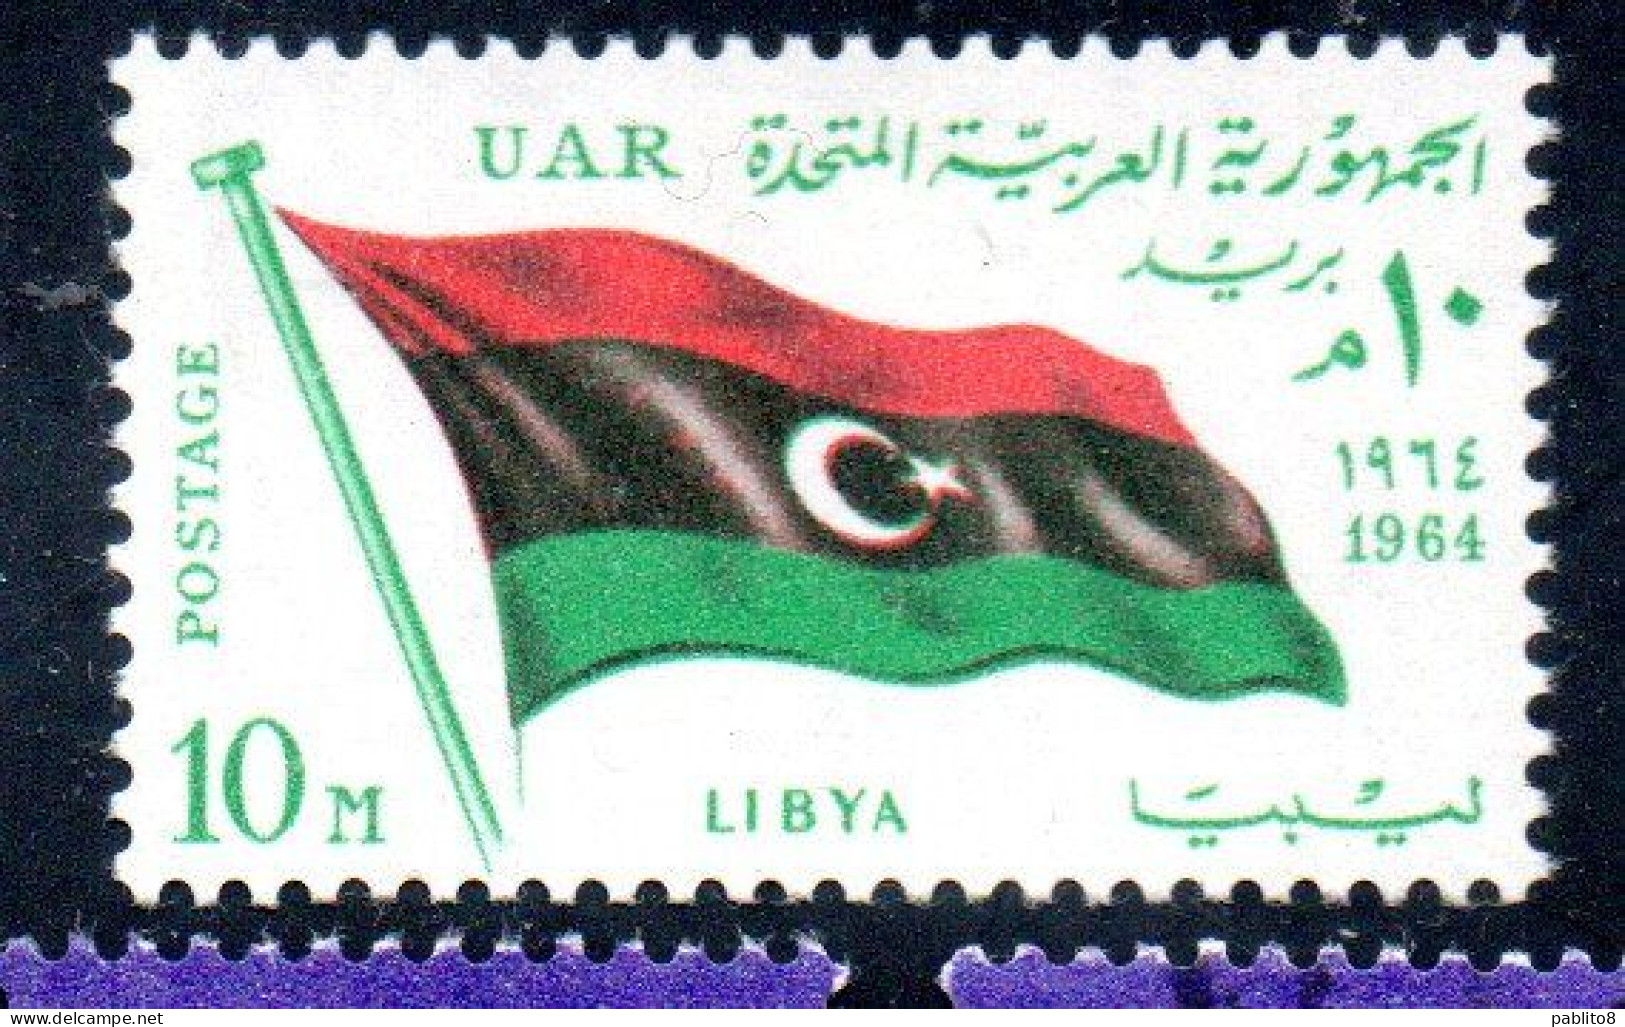 UAR EGYPT EGITTO 1964 SECOND MEETING OF HEADS STATE ARAB LEAGUE FLAG OF LIBYA 10m  MH - Nuevos